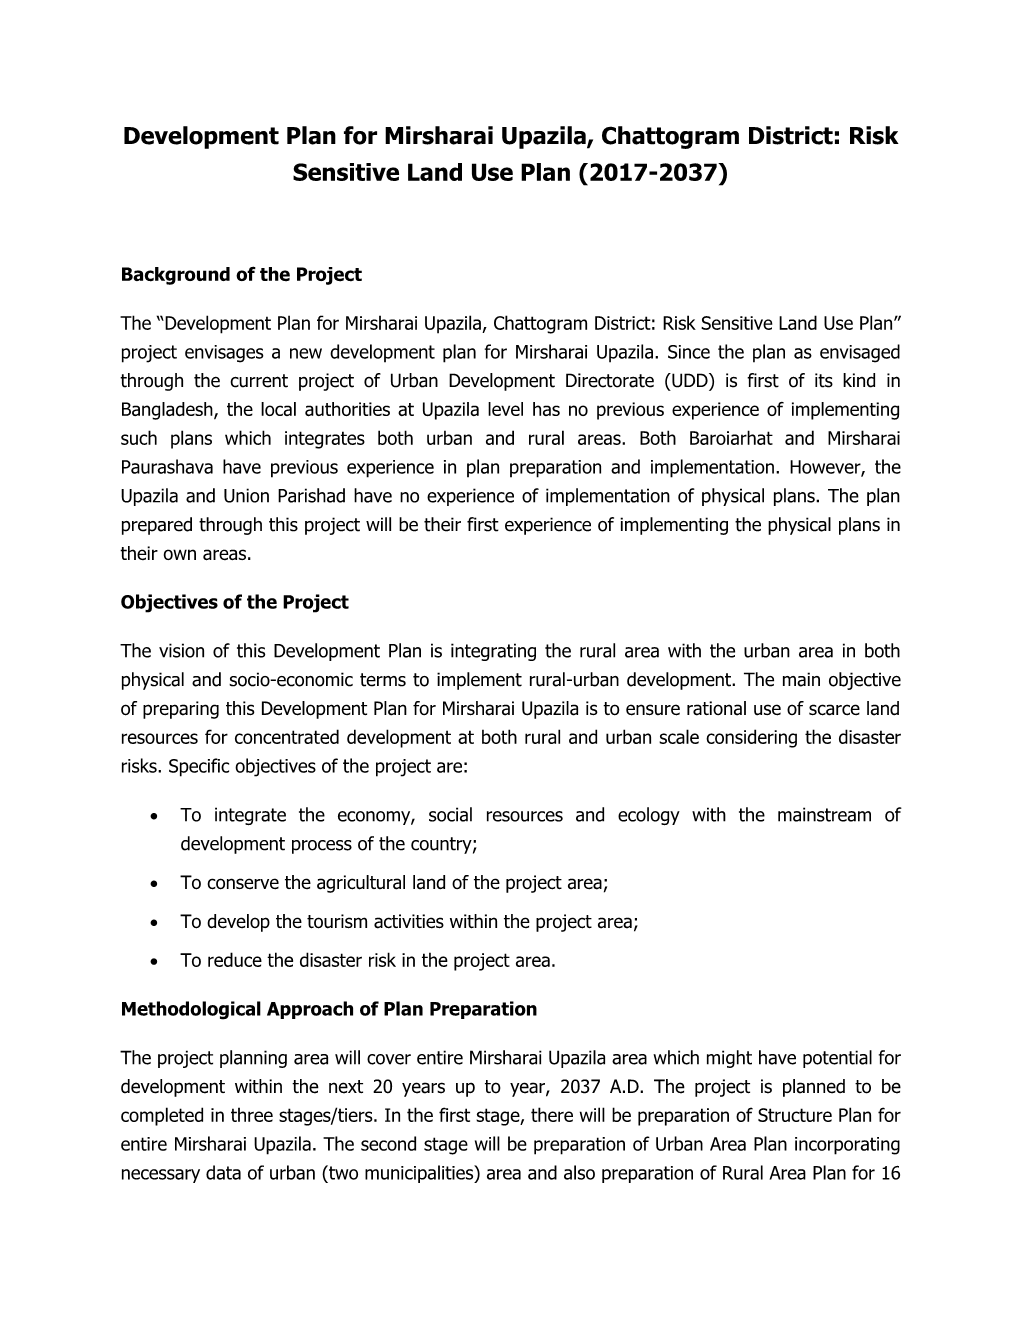 Risk Sensitive Land Use Plan (2017-2037)